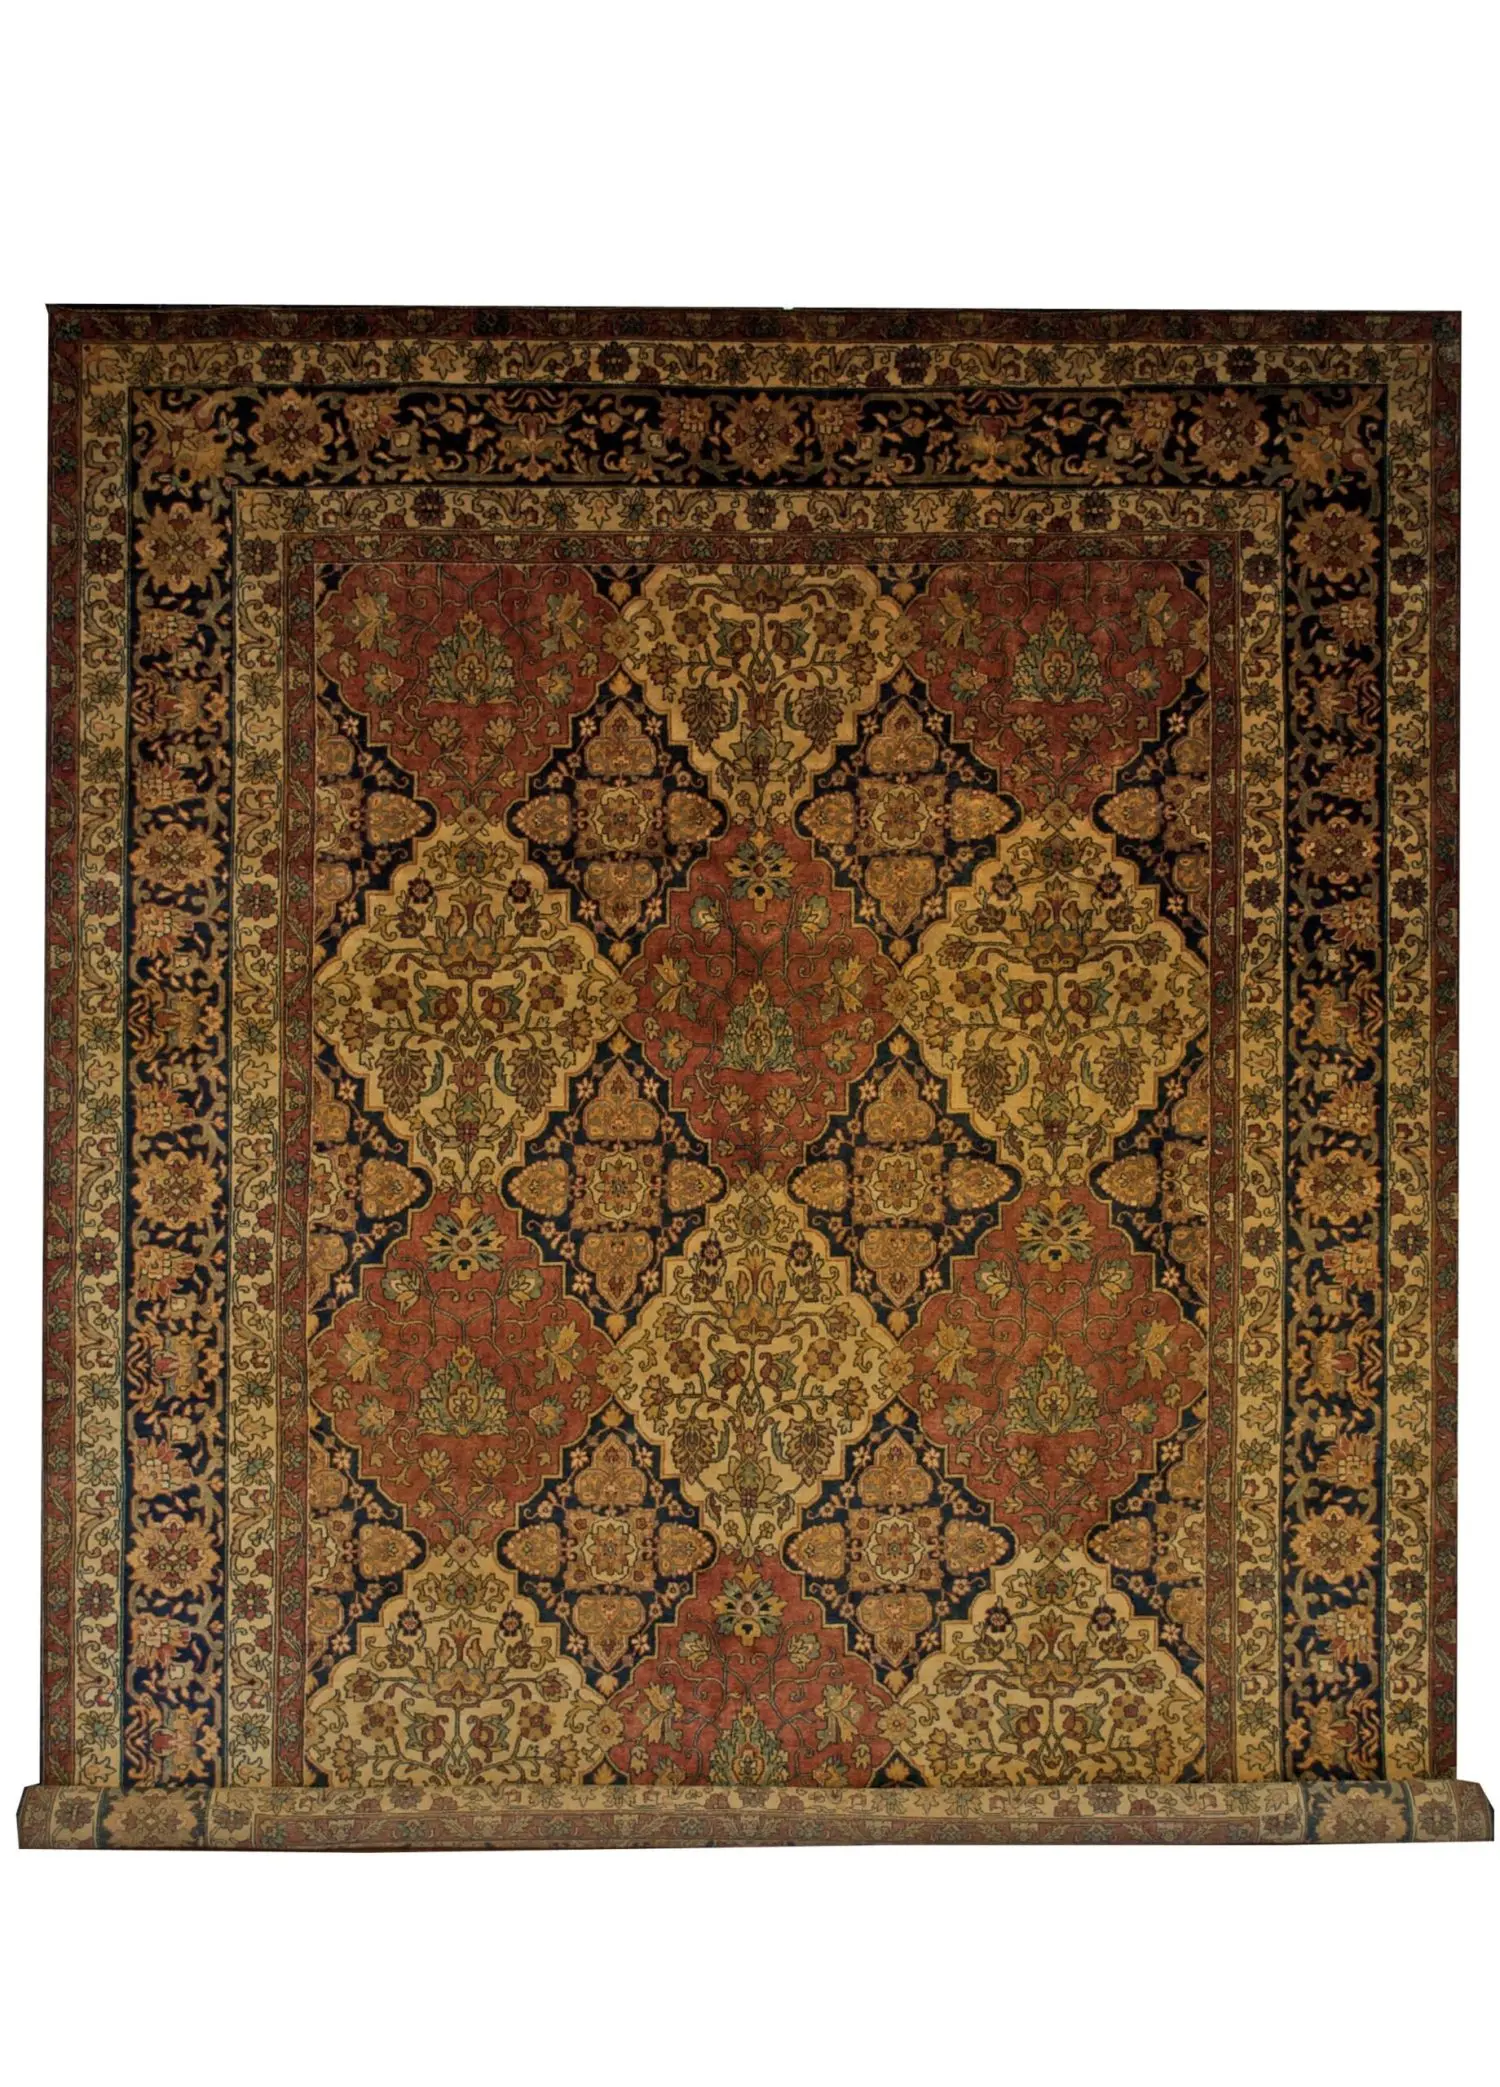 Old World Kerman 9' x 11' 9" Handmade Area Rug - Shabahang Royal Carpet